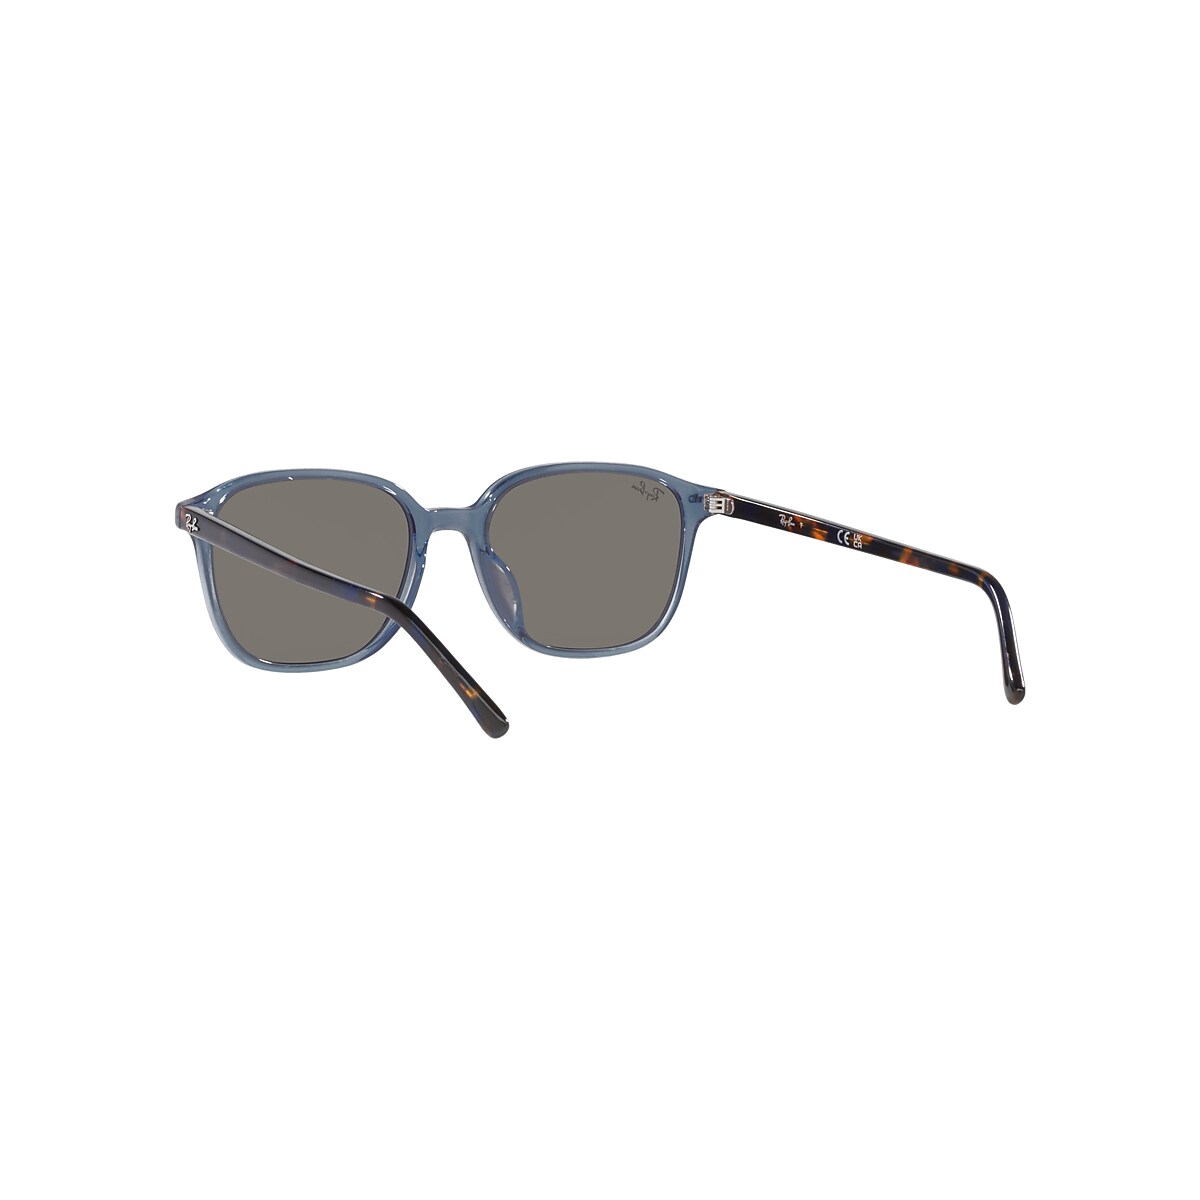 LEONARD Sunglasses in Transparent Dark Blue and Blue - RB2193F 